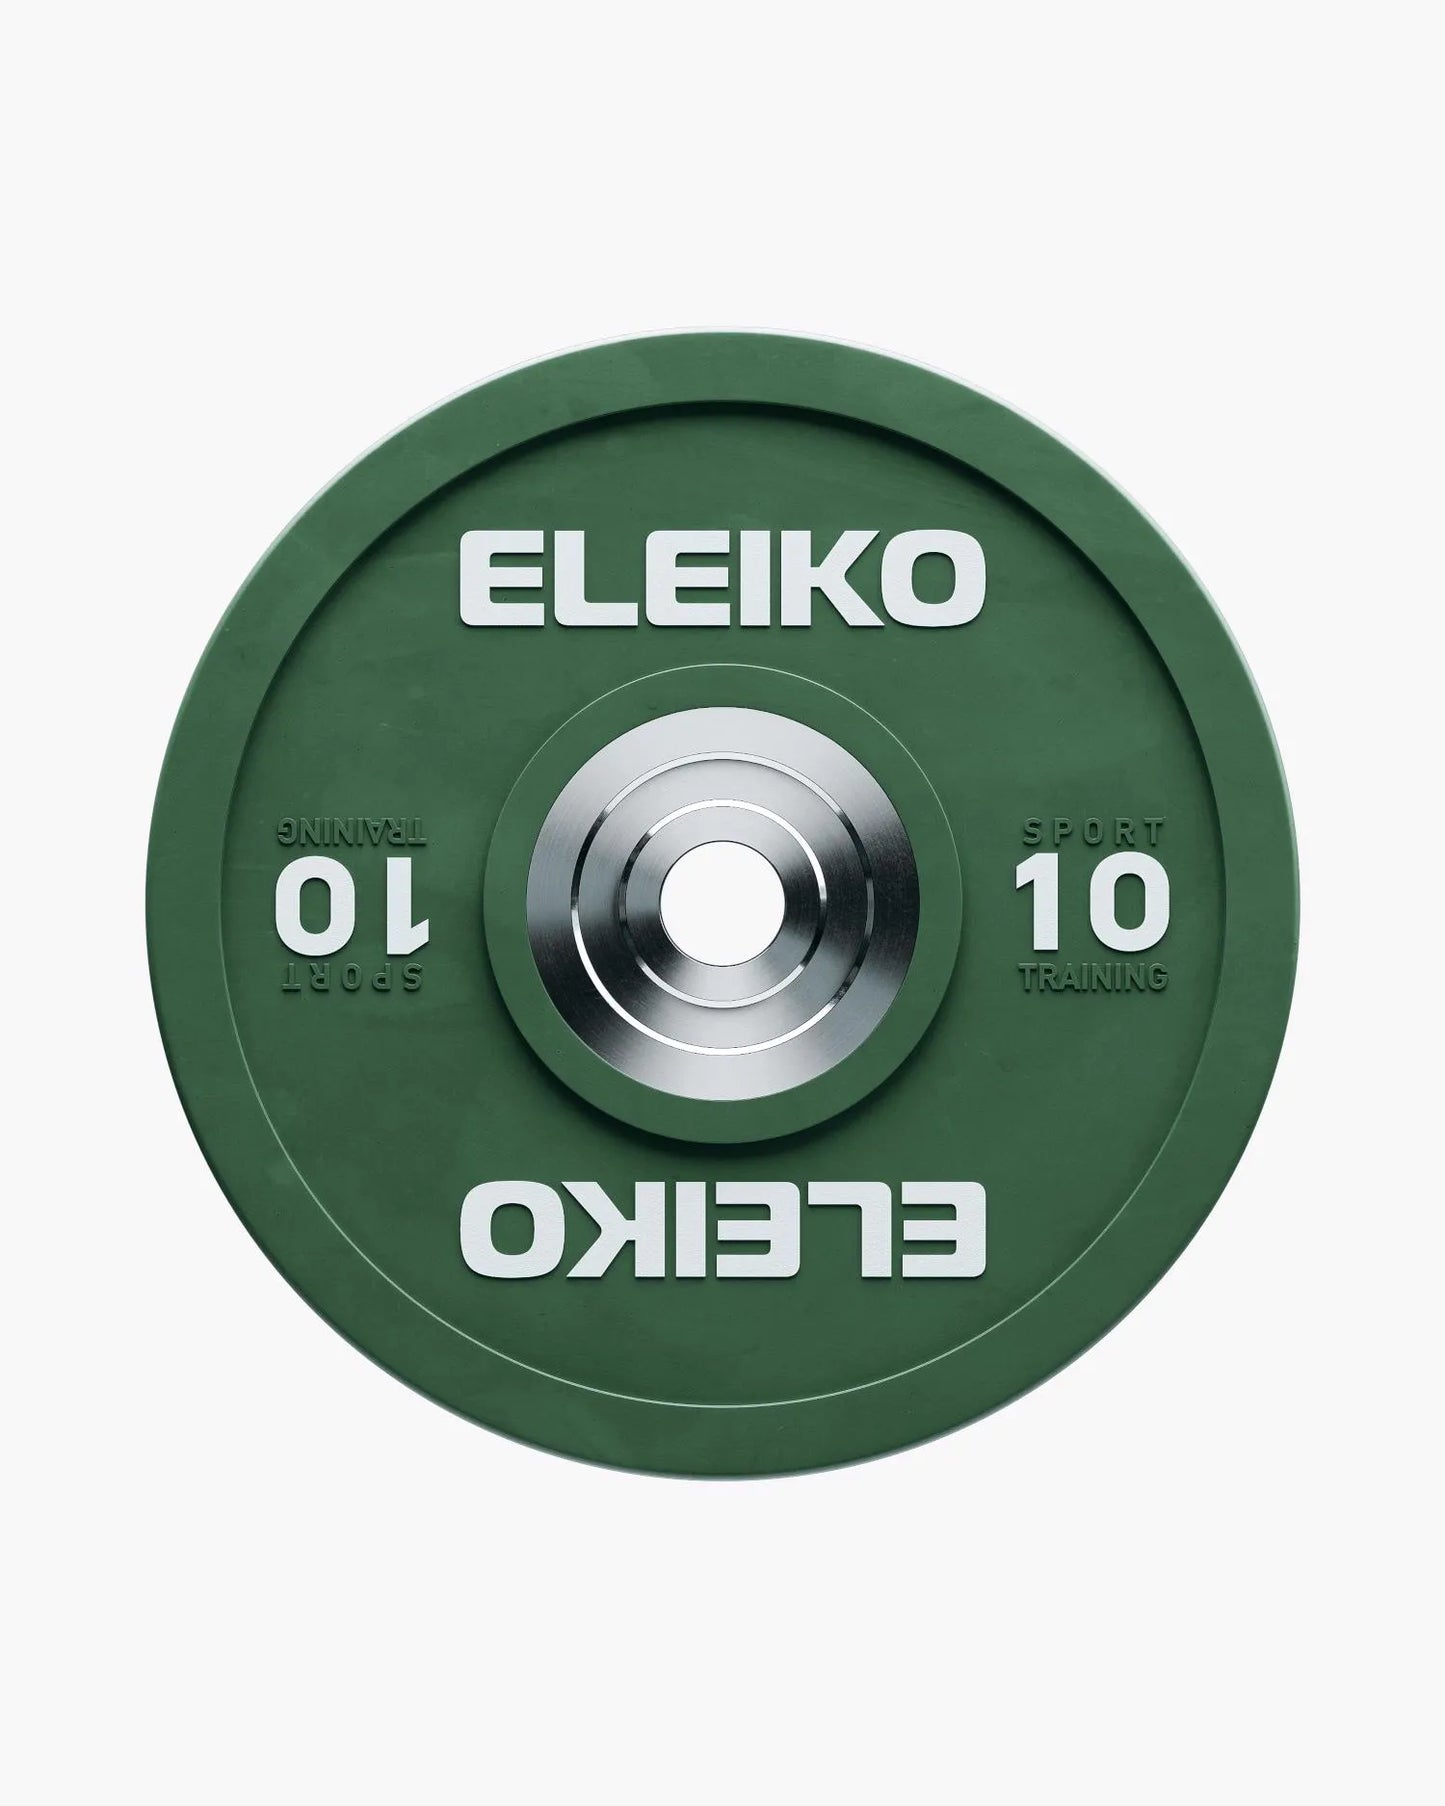 Eleiko Sport Training Plate